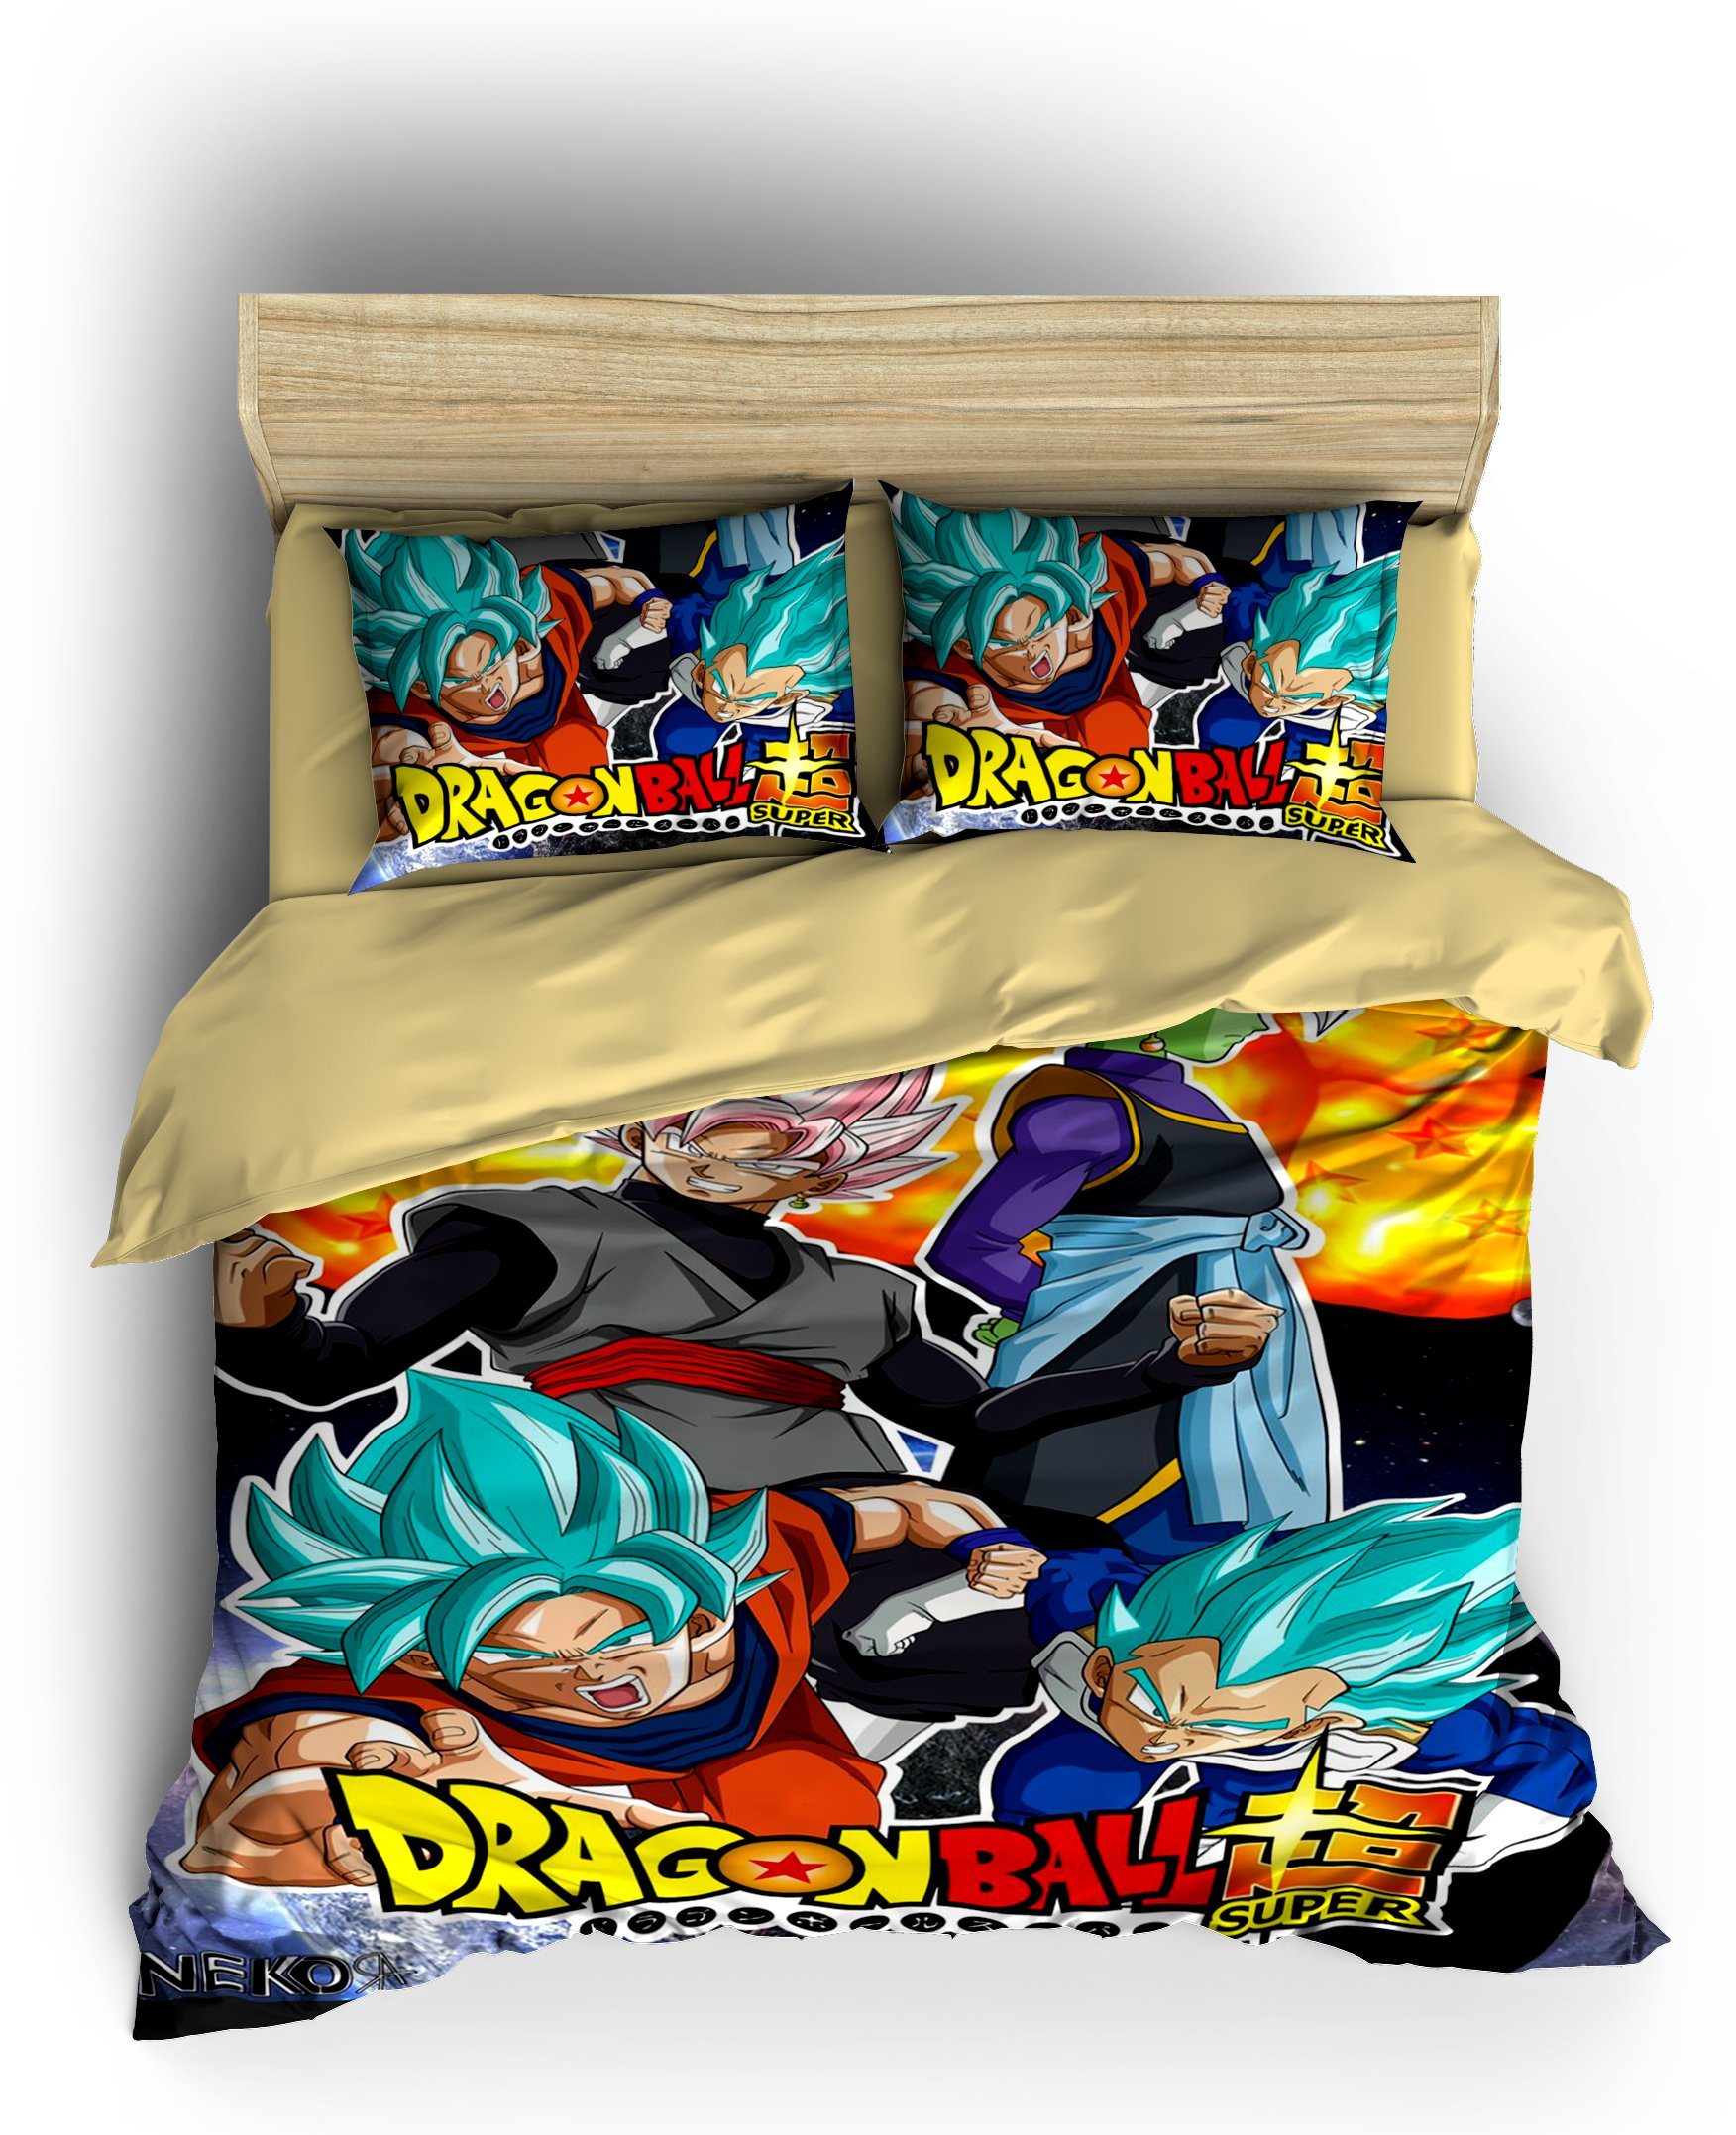 Comforter Cover DBS  Zamasu vs Goku Single - AU (140x210cm) Official Dragon Ball Z Merch